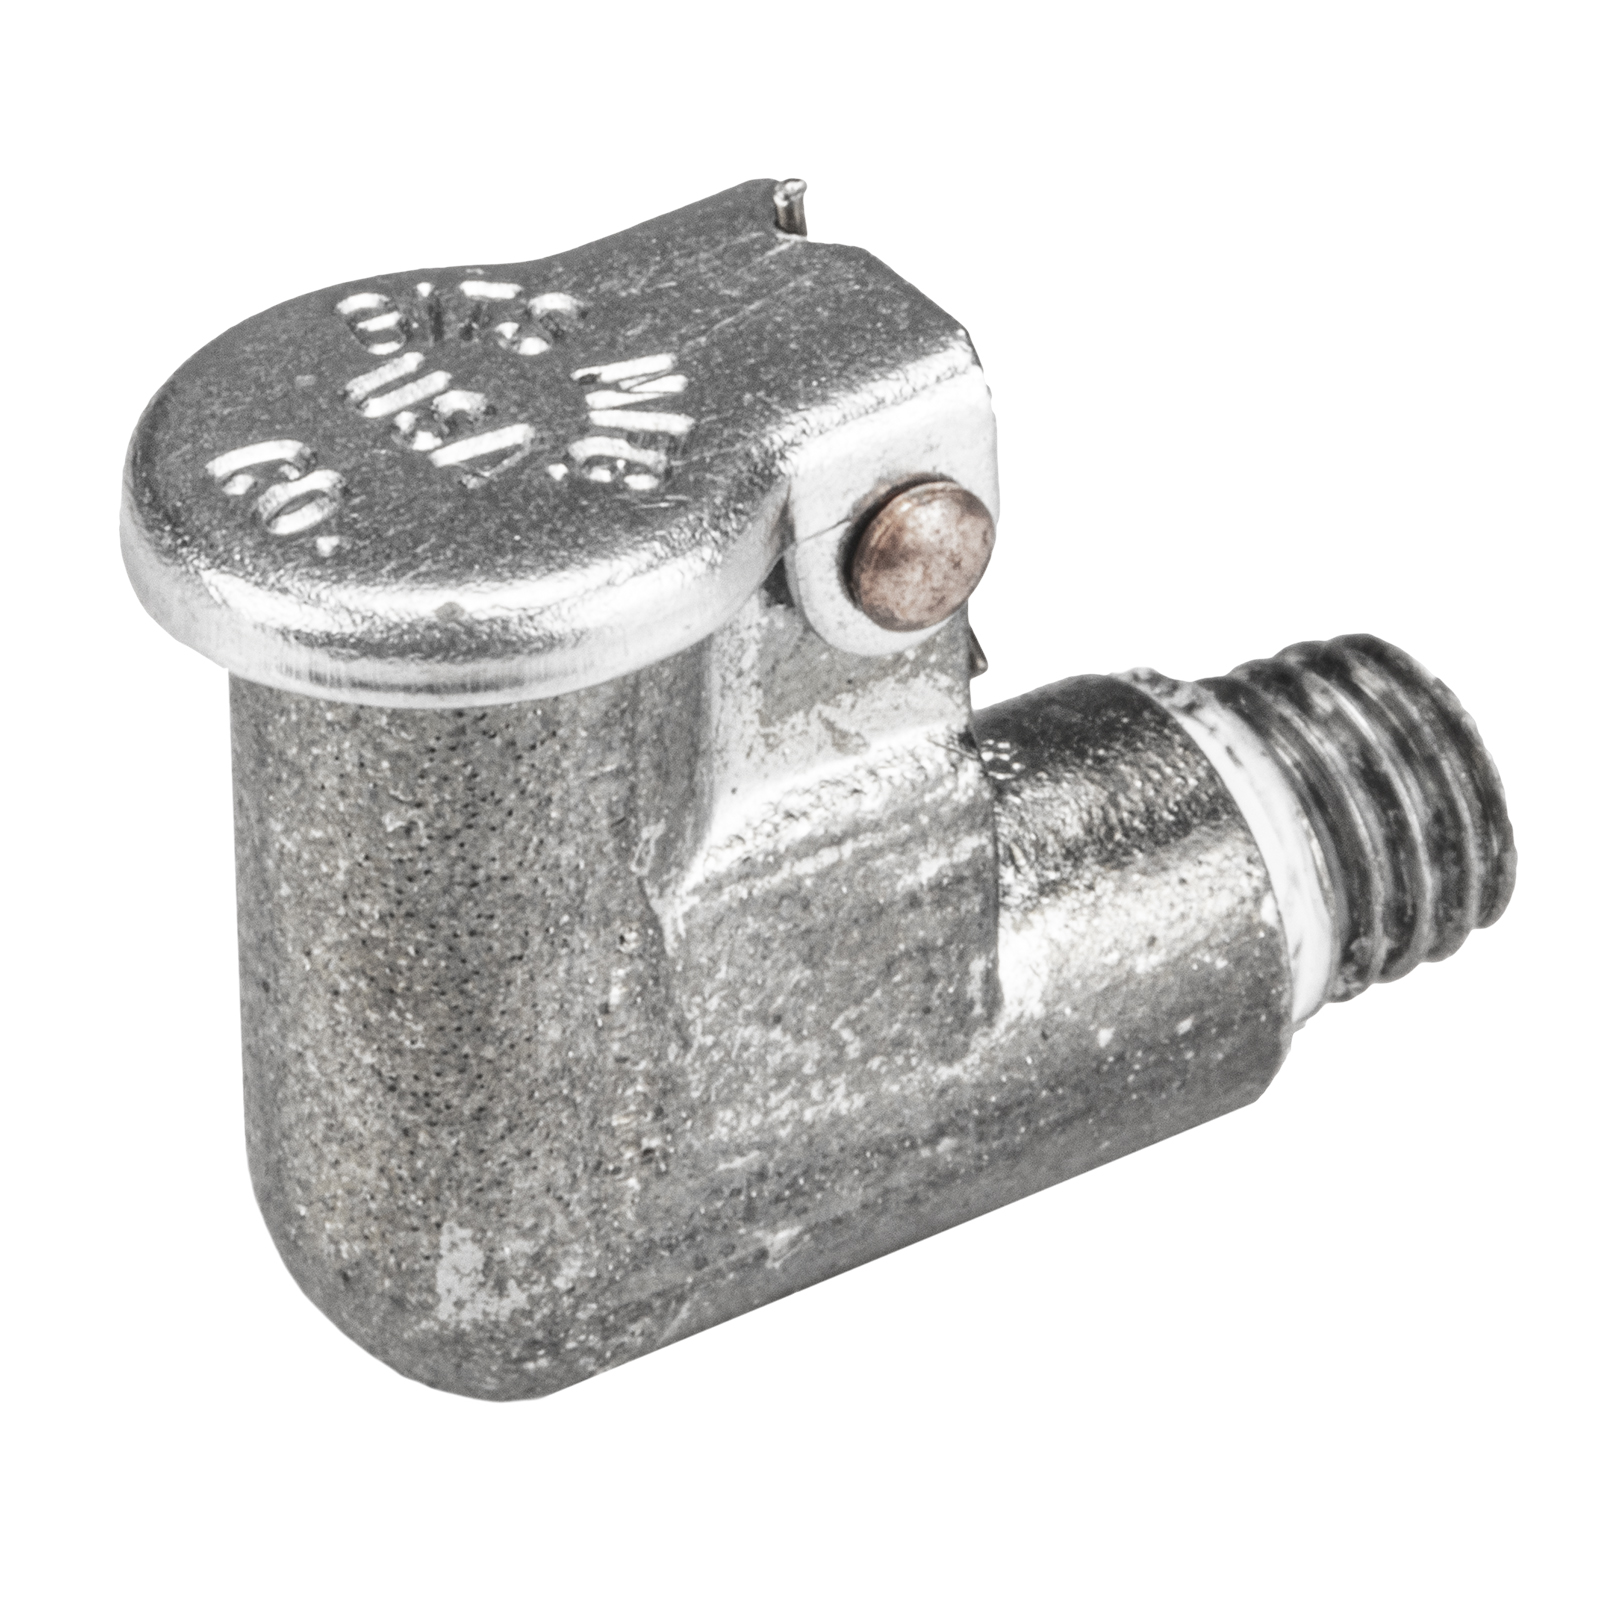 Oiler for Mini Spool valve DV-5325 series. Thread M5